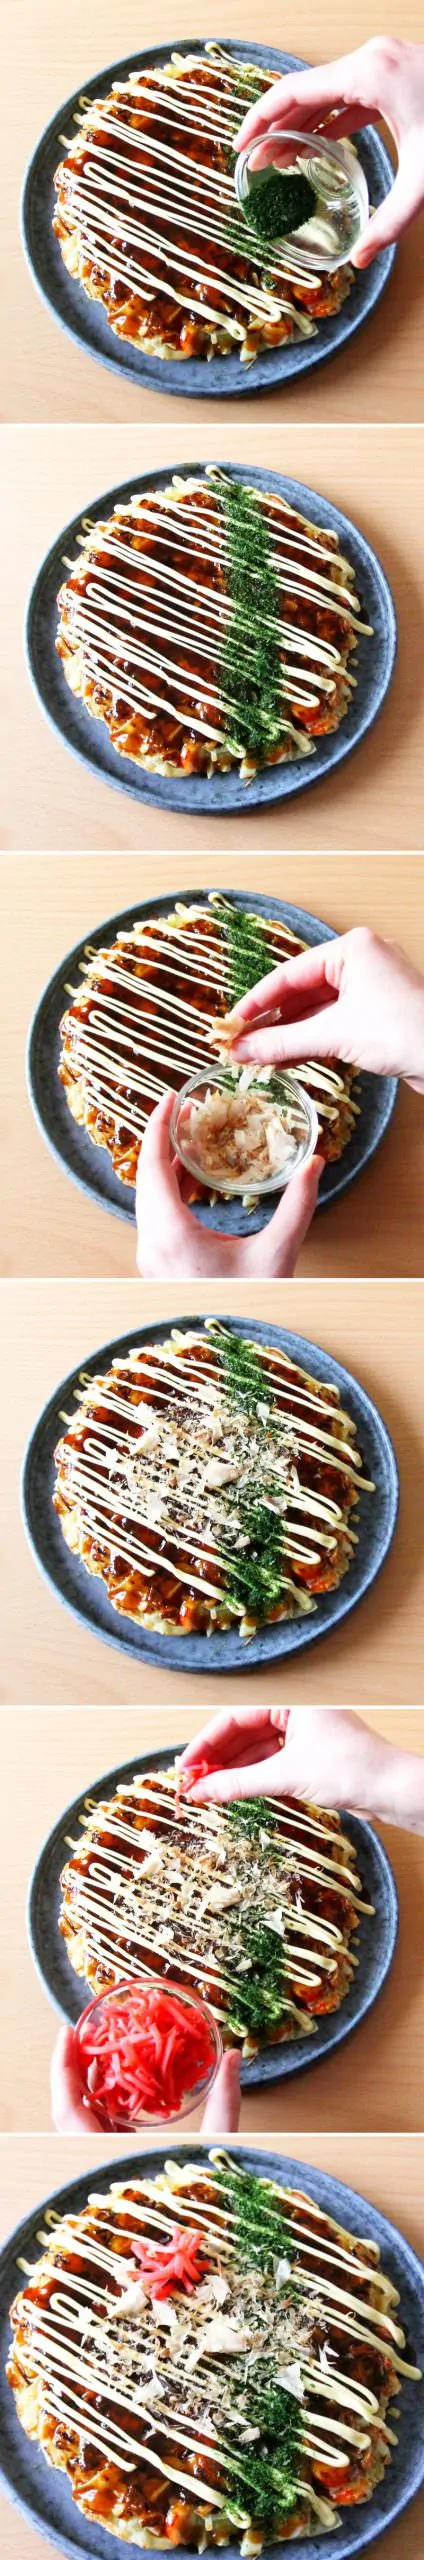 Grundrezept Okonomiyaki Schritt 10 garnieren